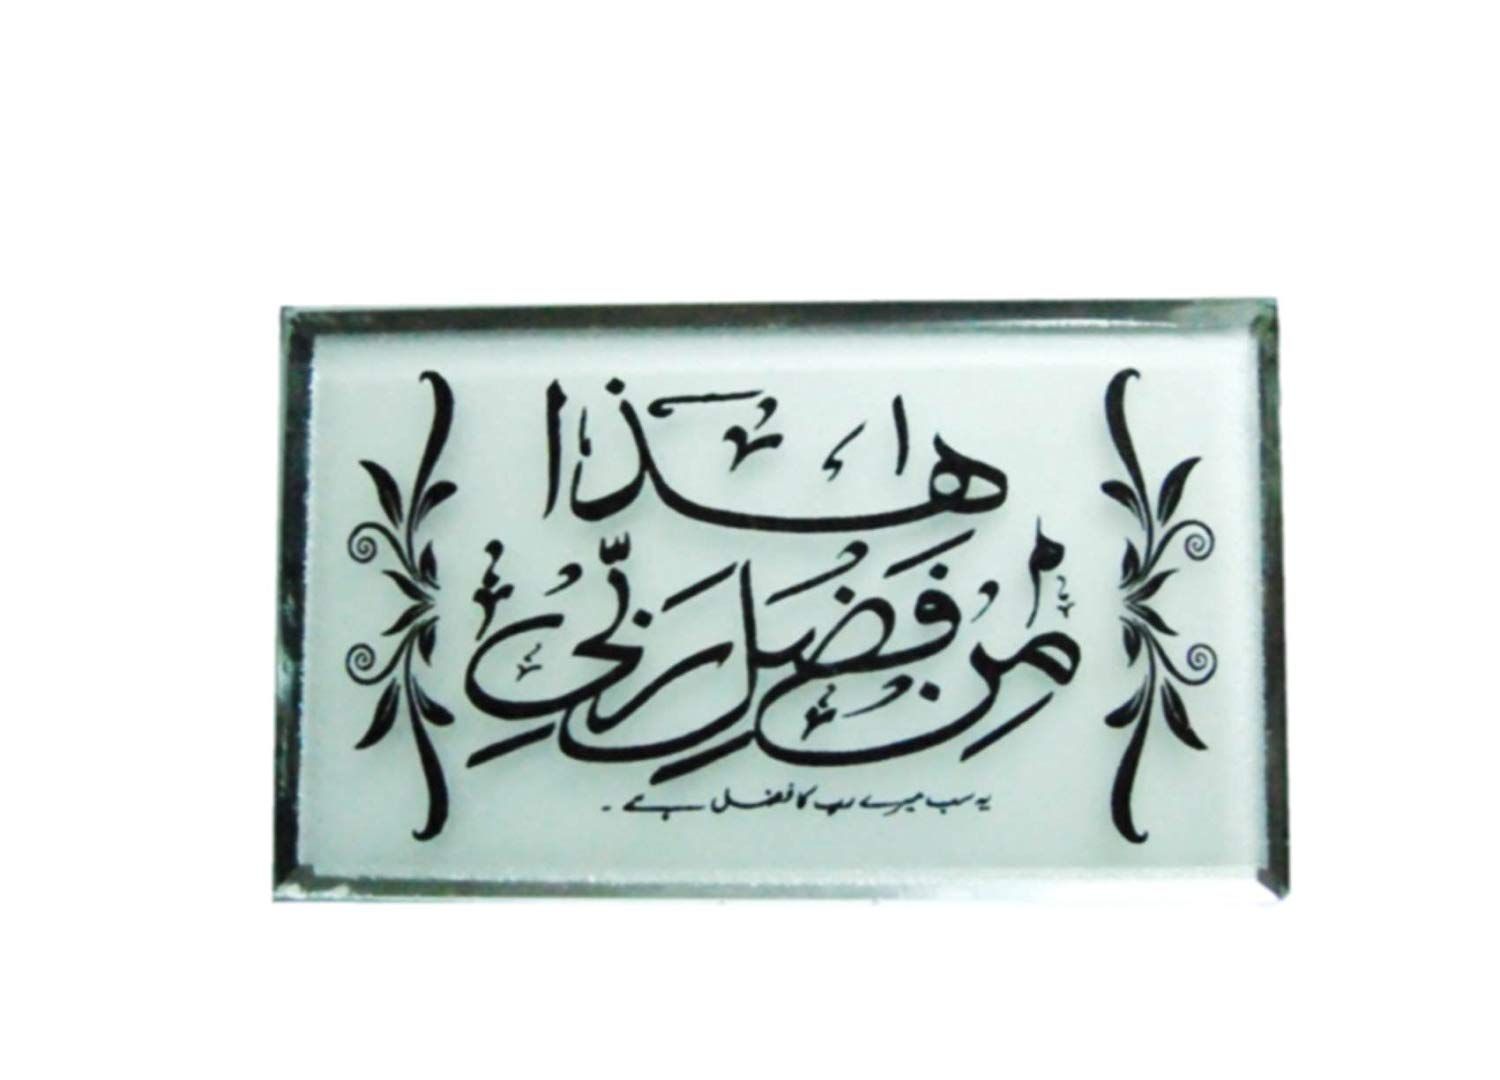 Unique Designed Islamic Verses Etched In Black On White - Haza Min Fazal E Rabbi , HD Wallpaper & Backgrounds